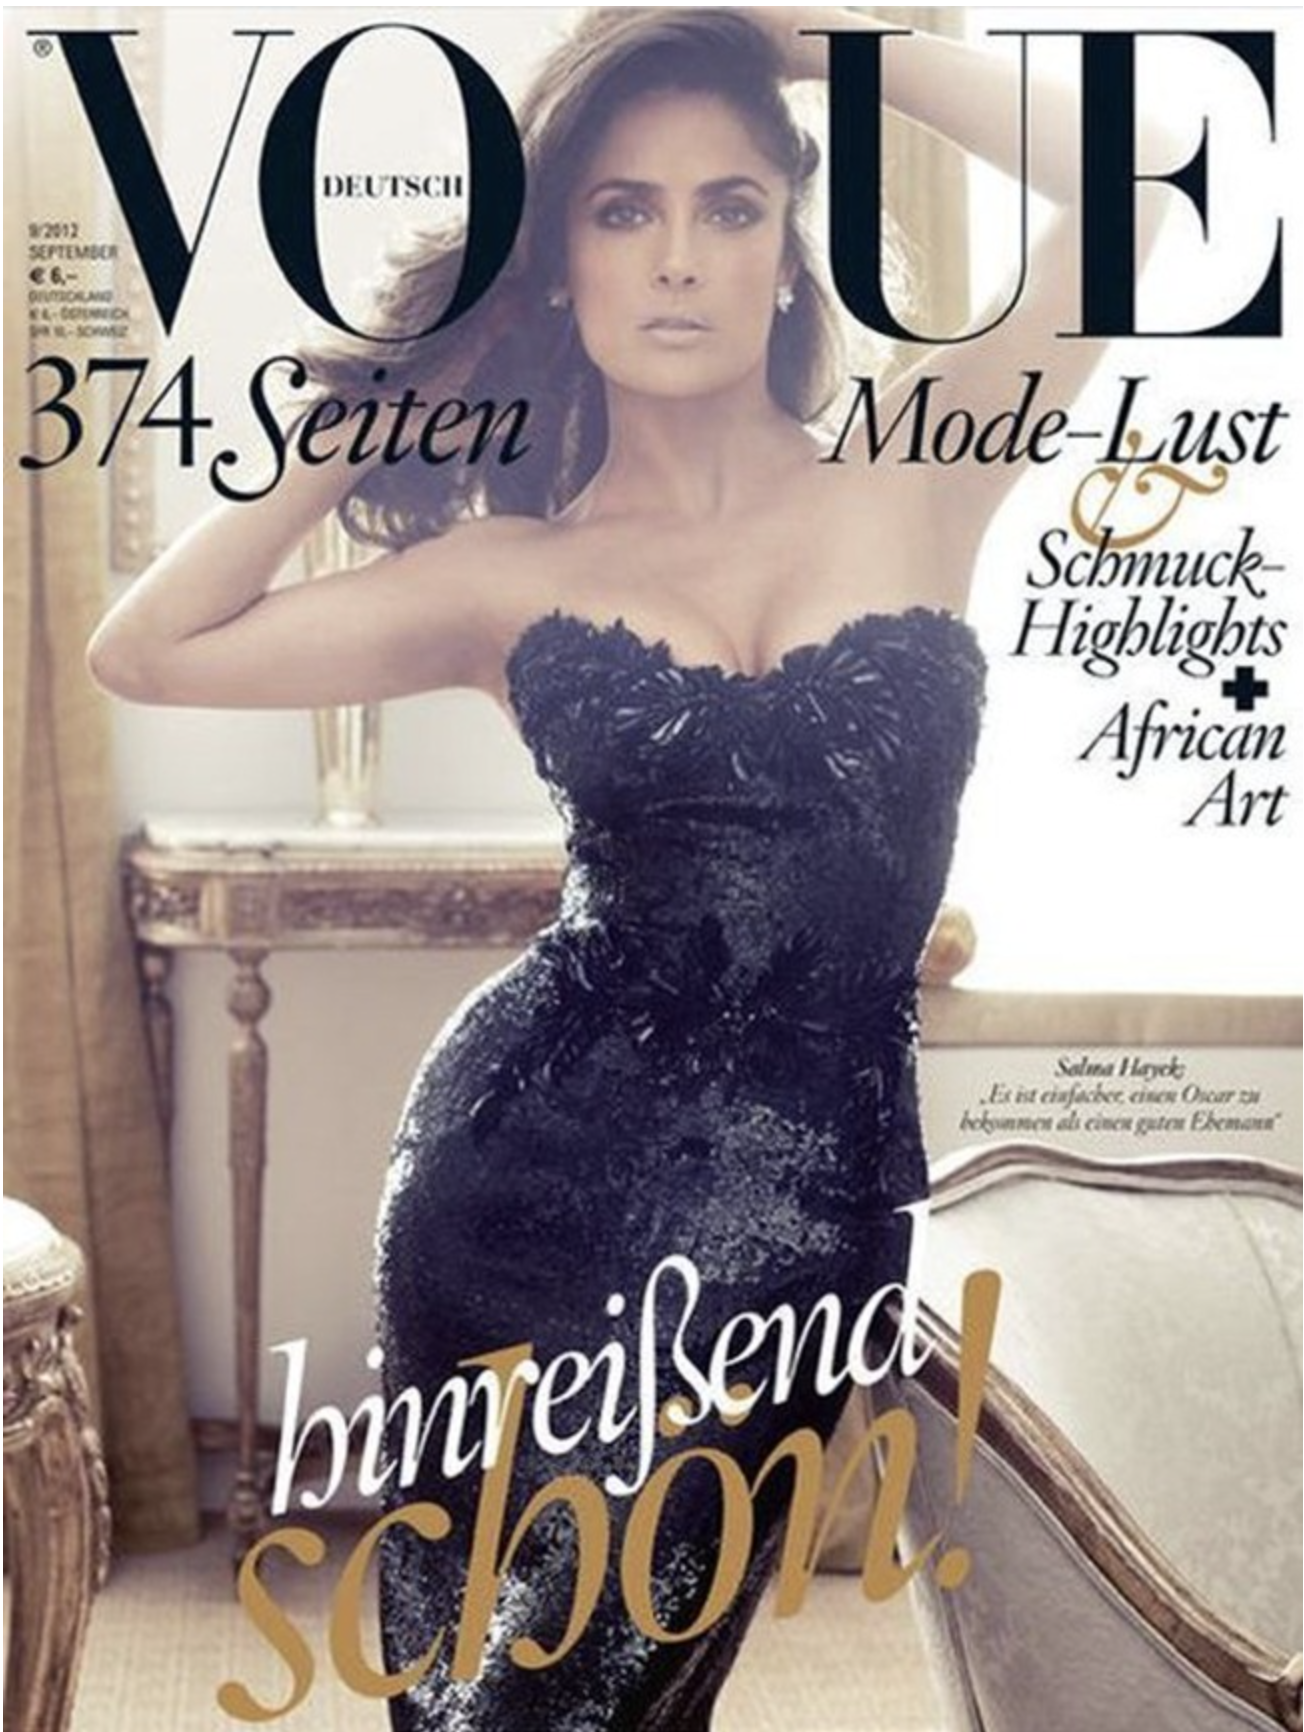 Salma-Hayek-by-Alexi-Lubomirski-Vogue-Germany-September-2012-3.png